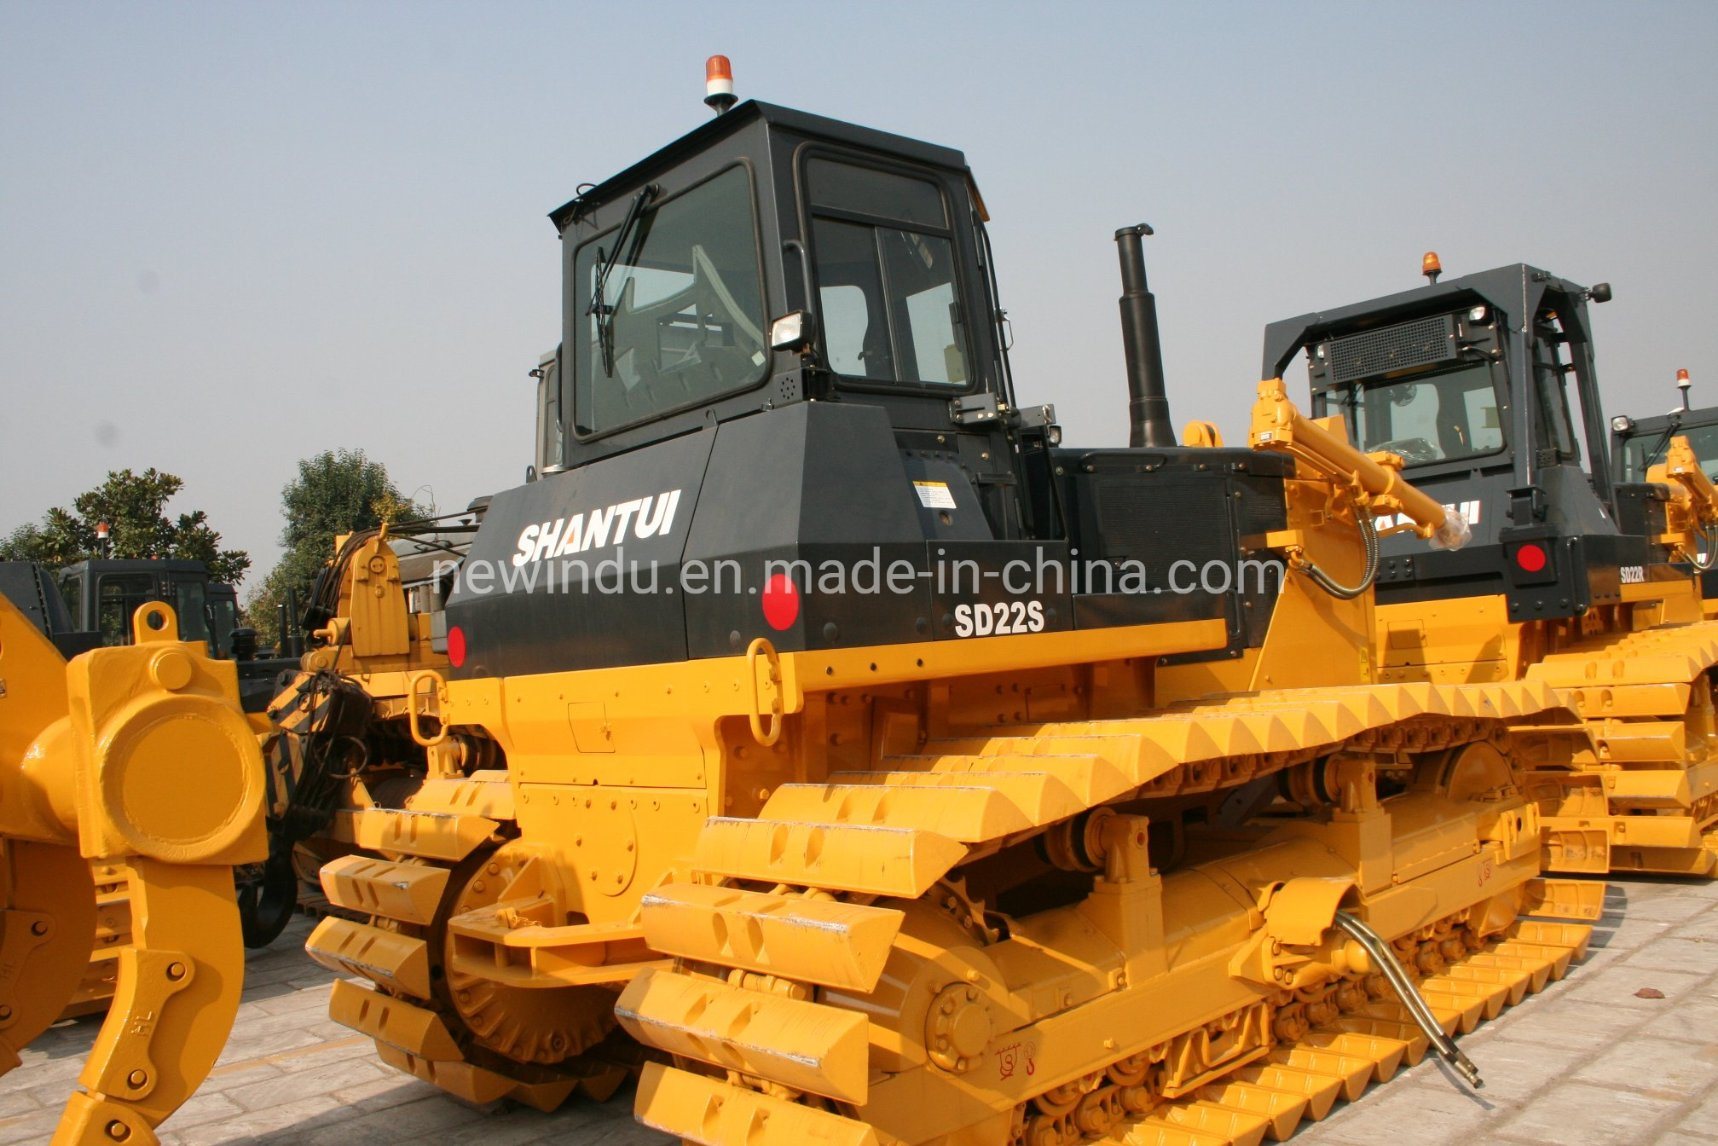 
                Marque Shantui SD22s 220HP type bulldozer pour la vente des terres humides
            